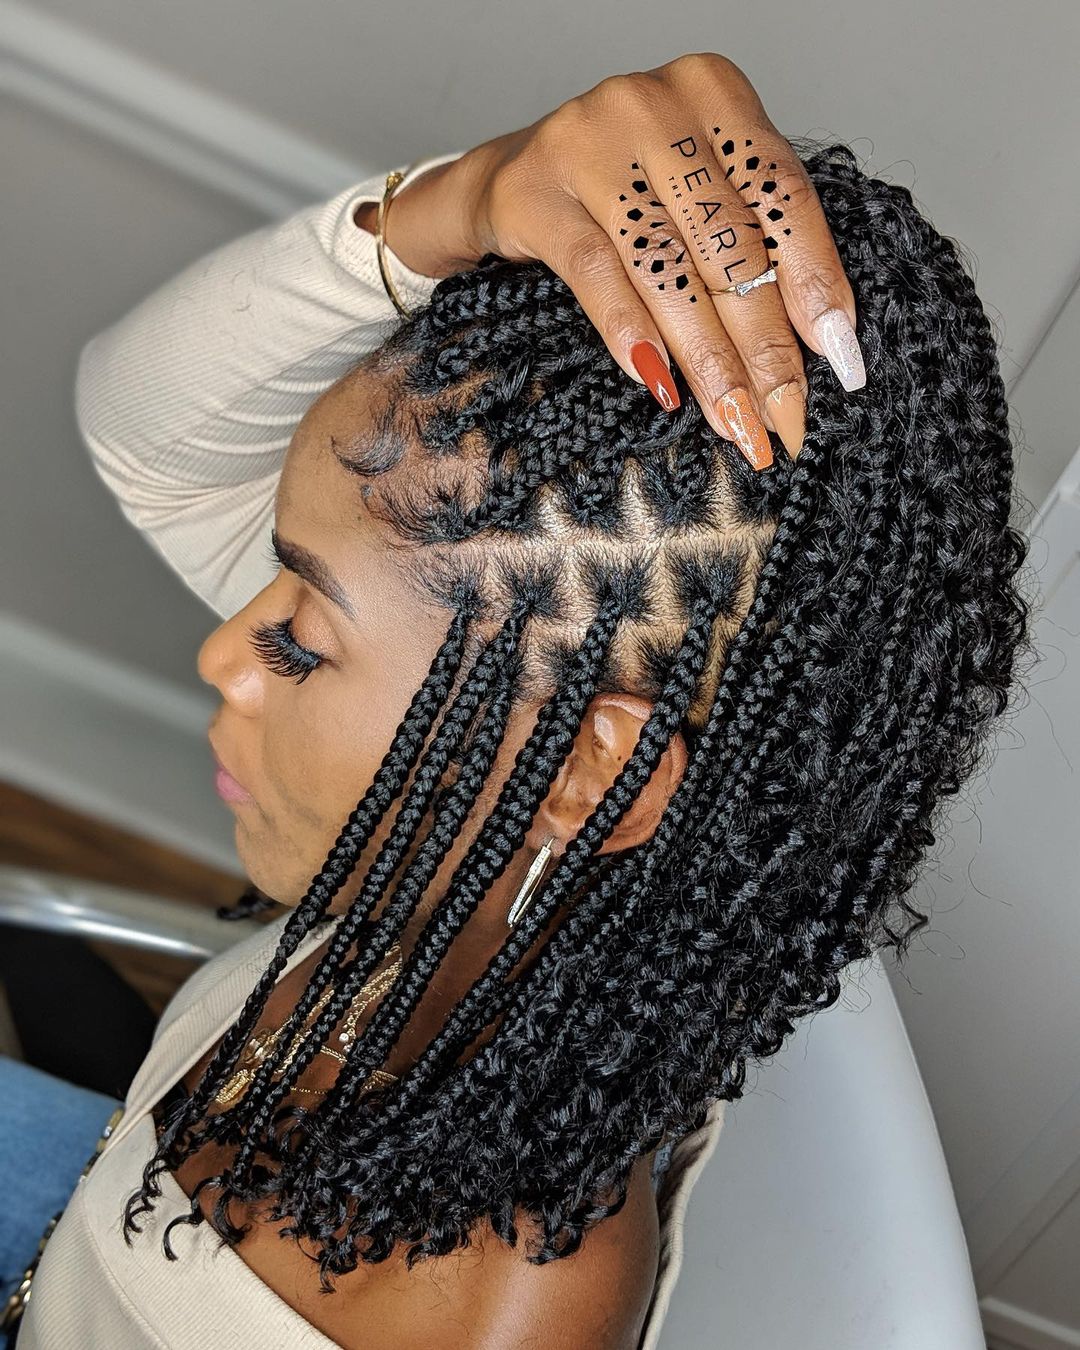 Braided Hairstyles For Black Girls Women